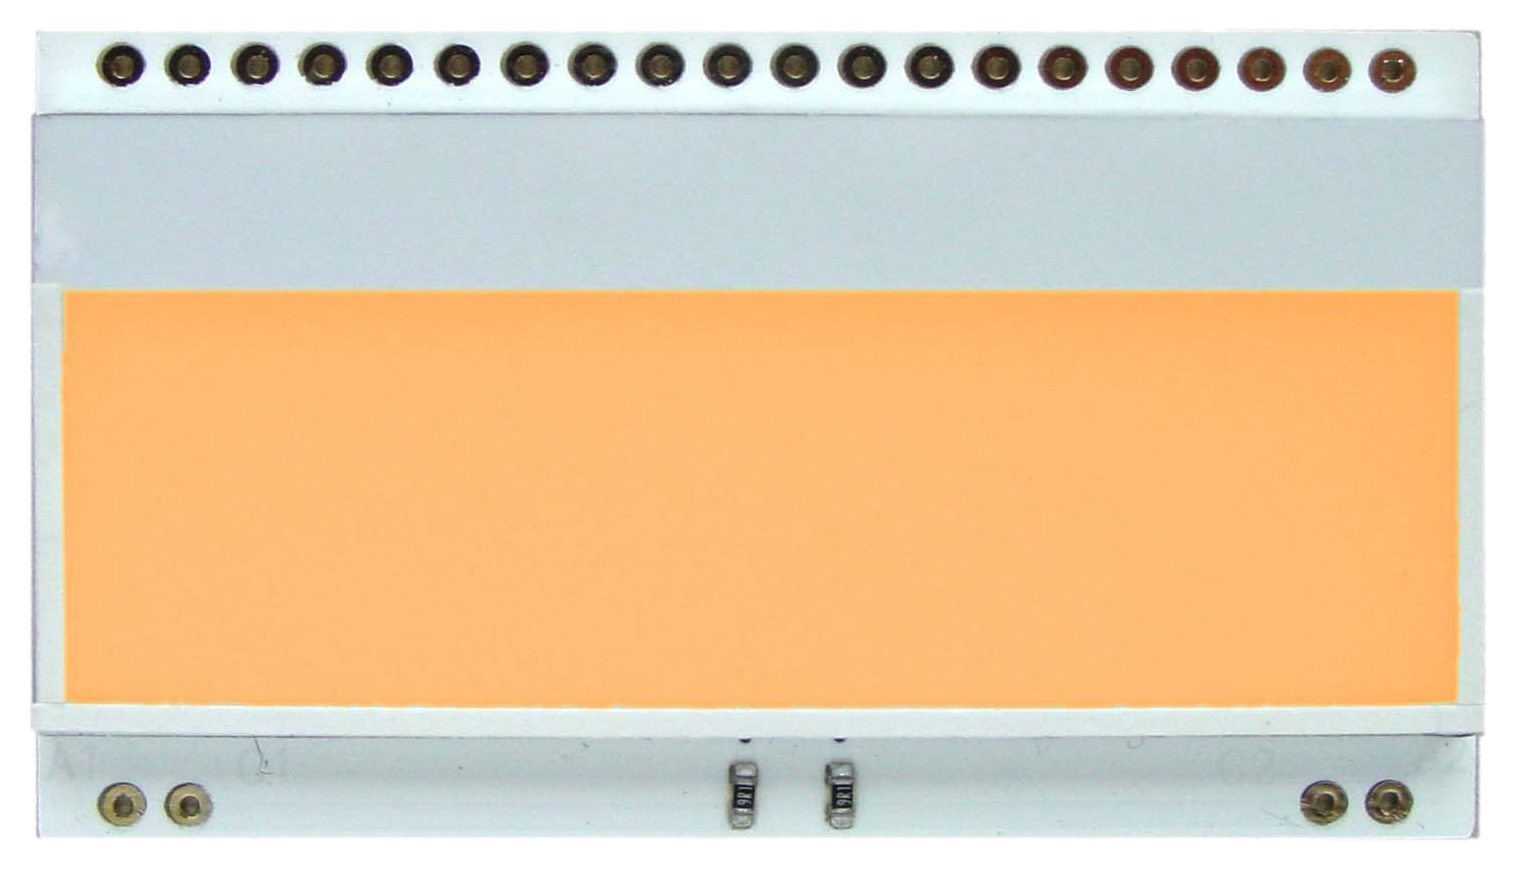 LED backlit unit for EA DOGM081-A / DOGM162-A / DOGM163-A / DOGM132-5, amber